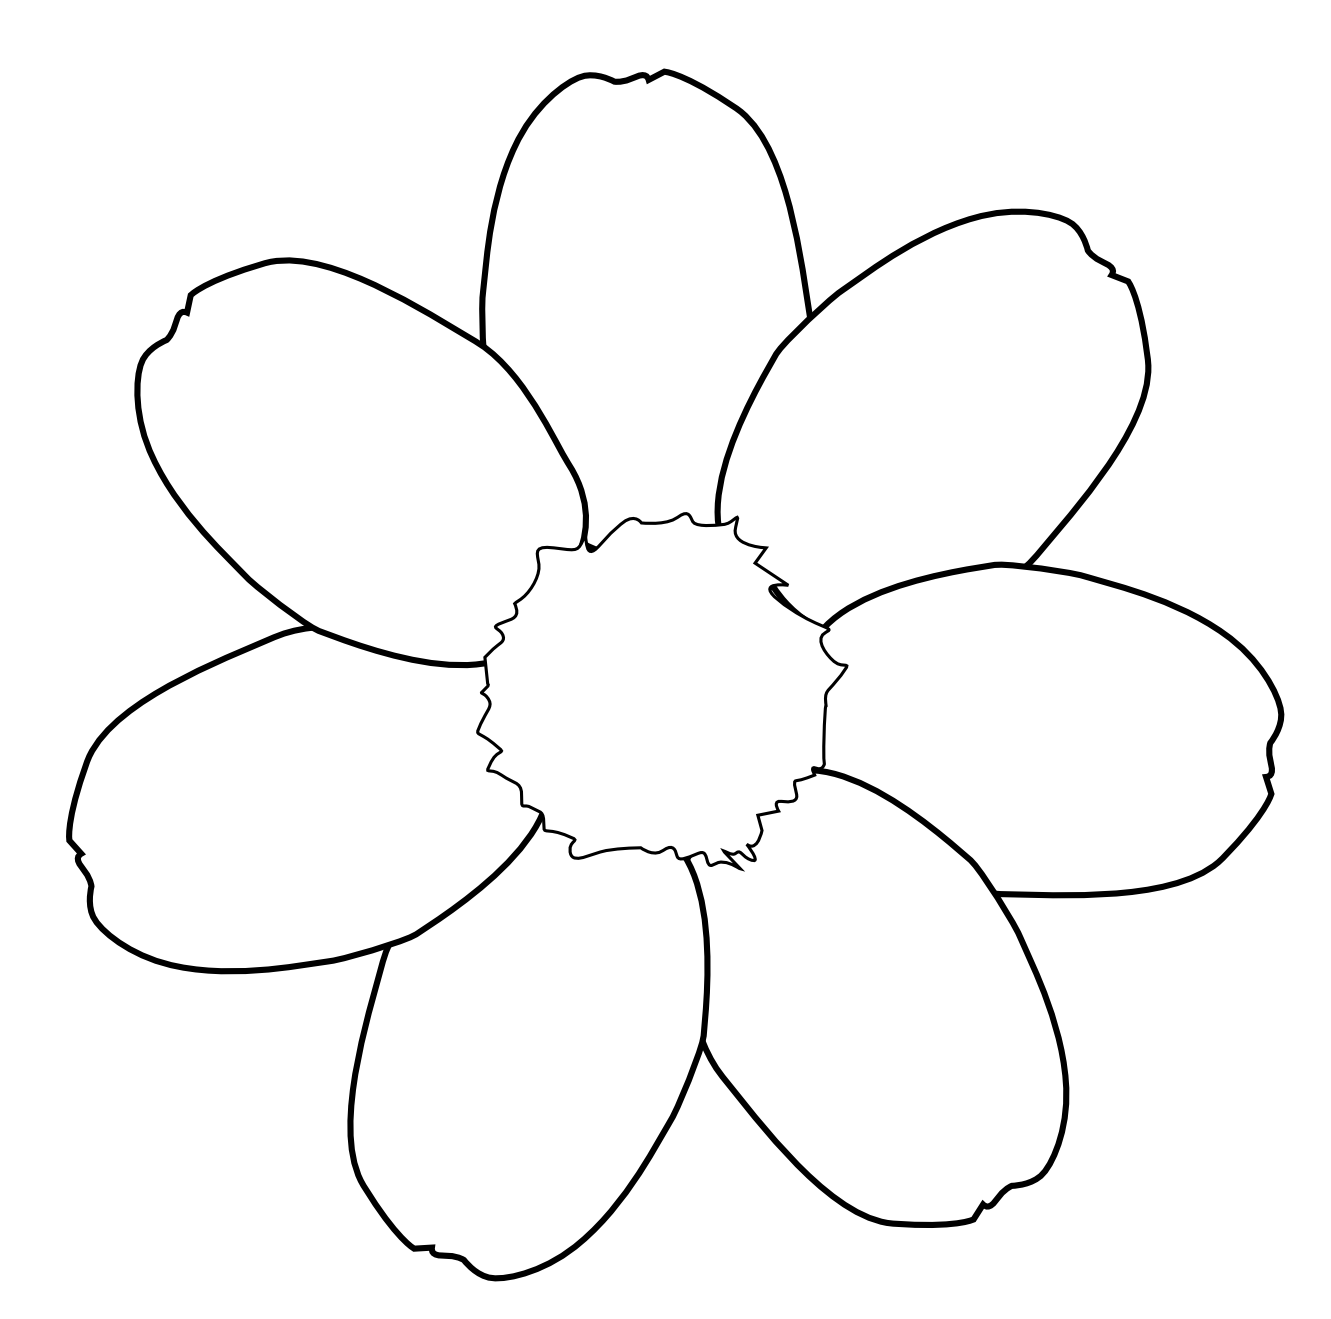 Daisy clipart cute. Free black white flower